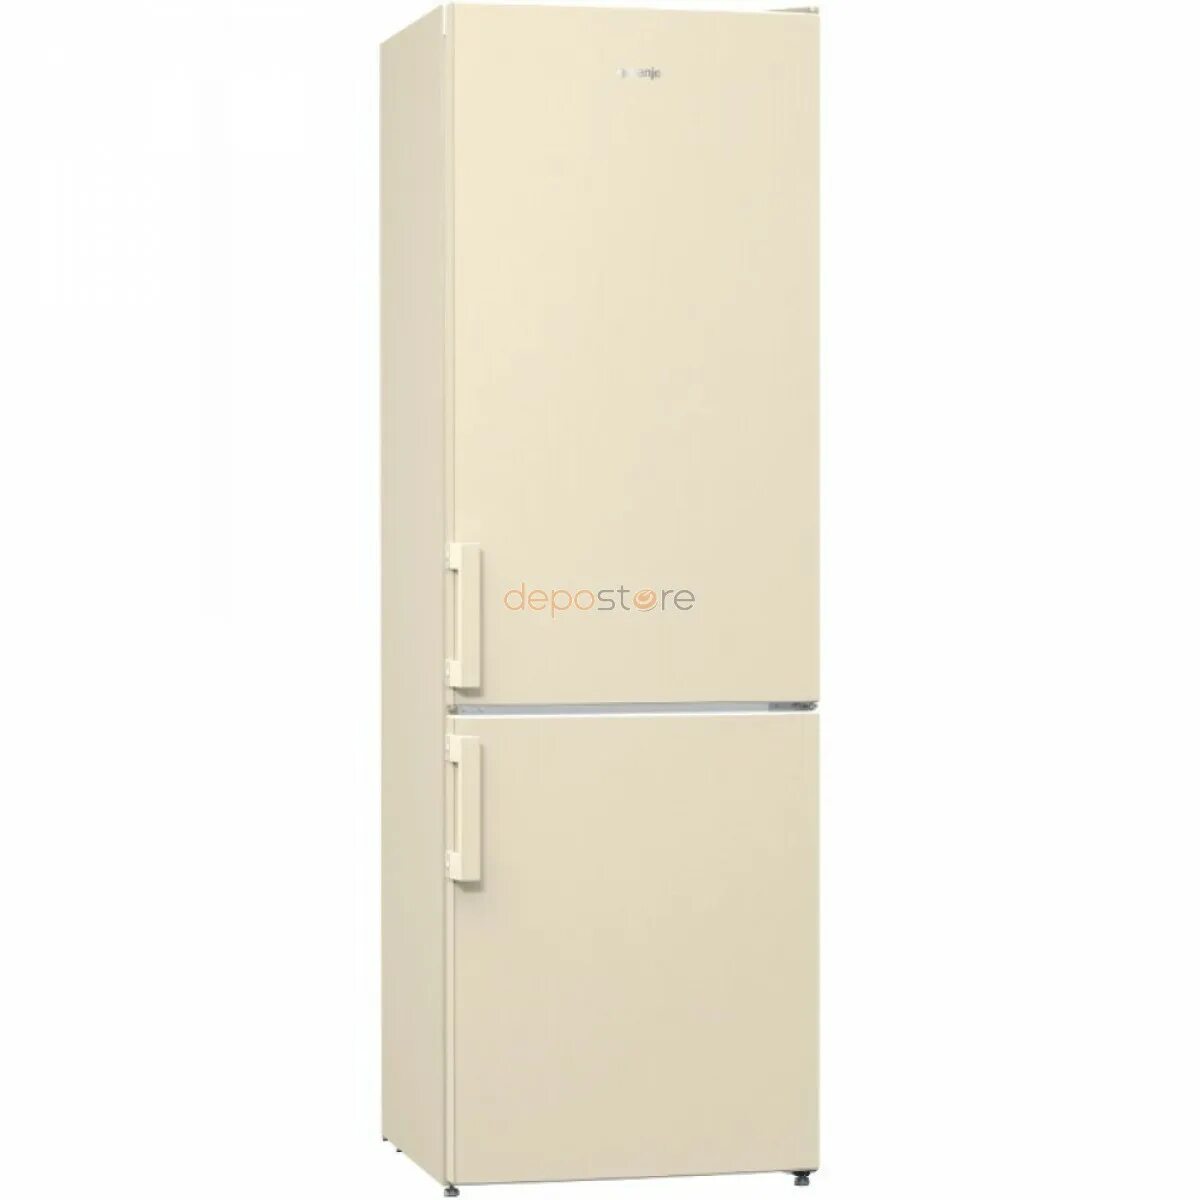 Холодильник Gorenje rk6192. Холодильник Gorenje RK 6192 EC. Холодильник Gorenje 185 см бежевый. Атлант бежевый двухкамерный холодильник цвет бежевый. Холодильник горение двухкамерный купить